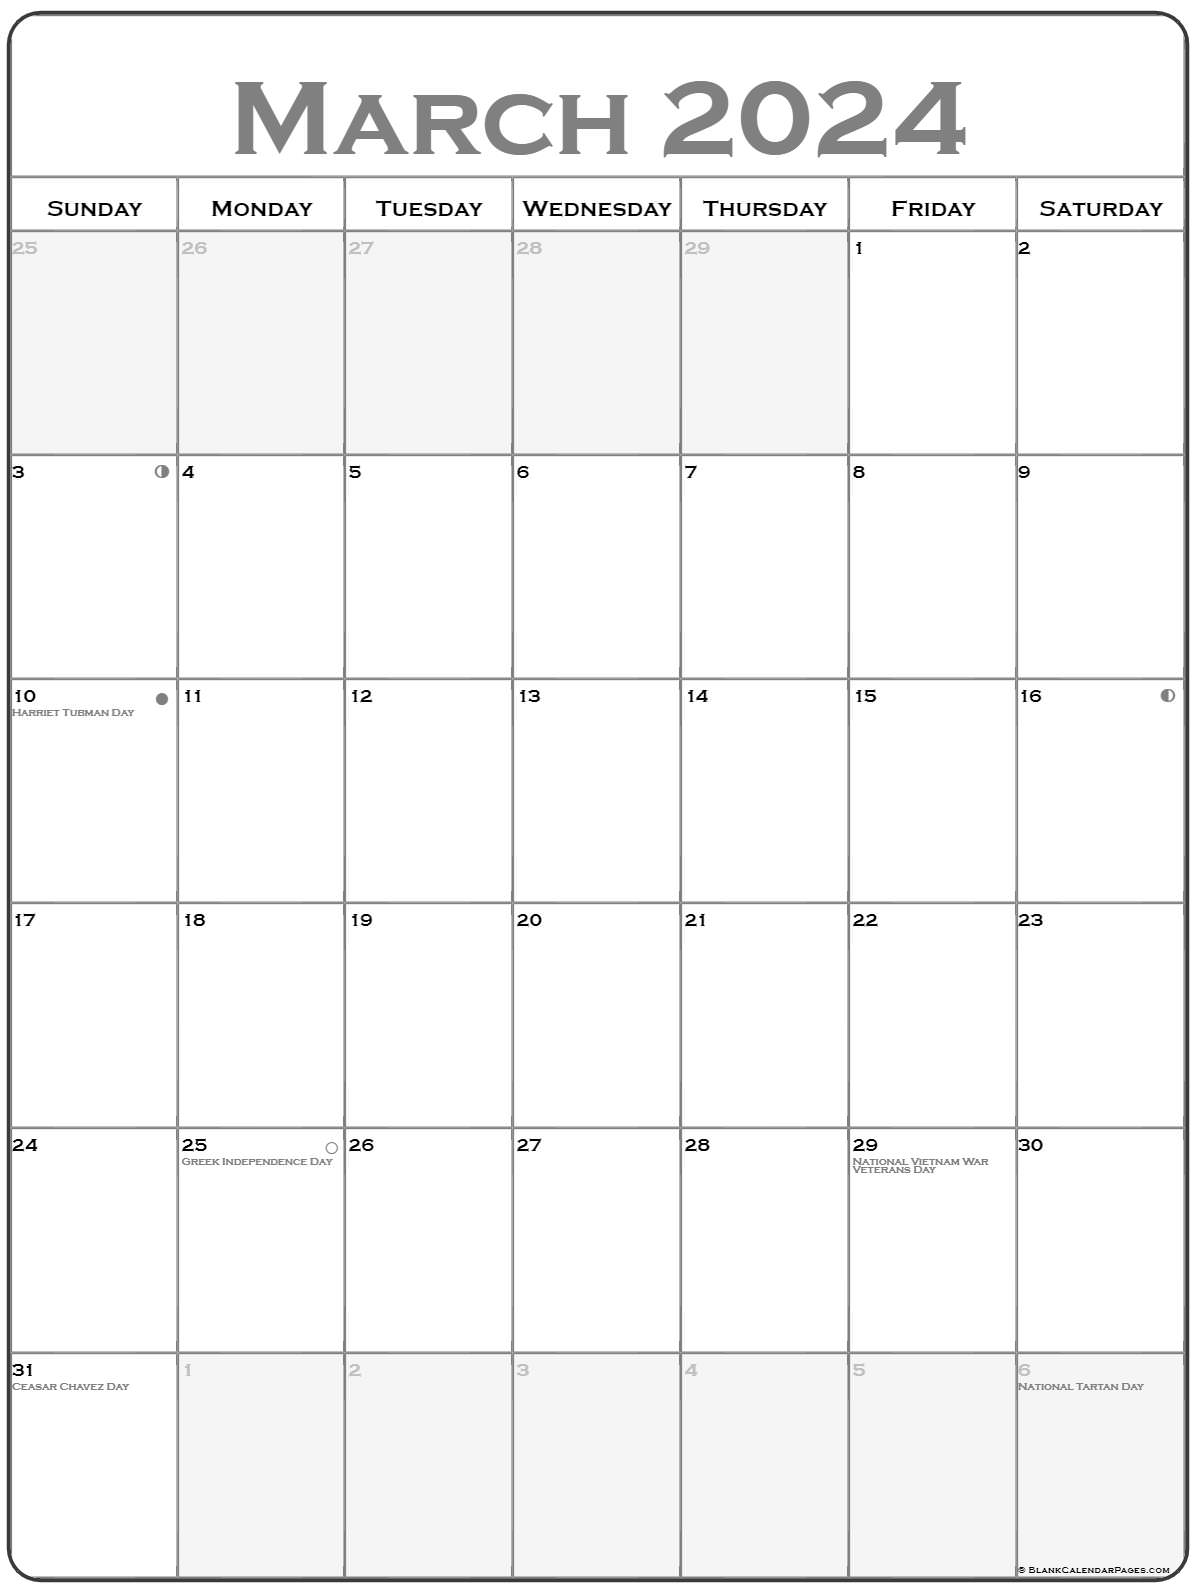 march 2023 calendar free printable calendar march 2023 calendar free